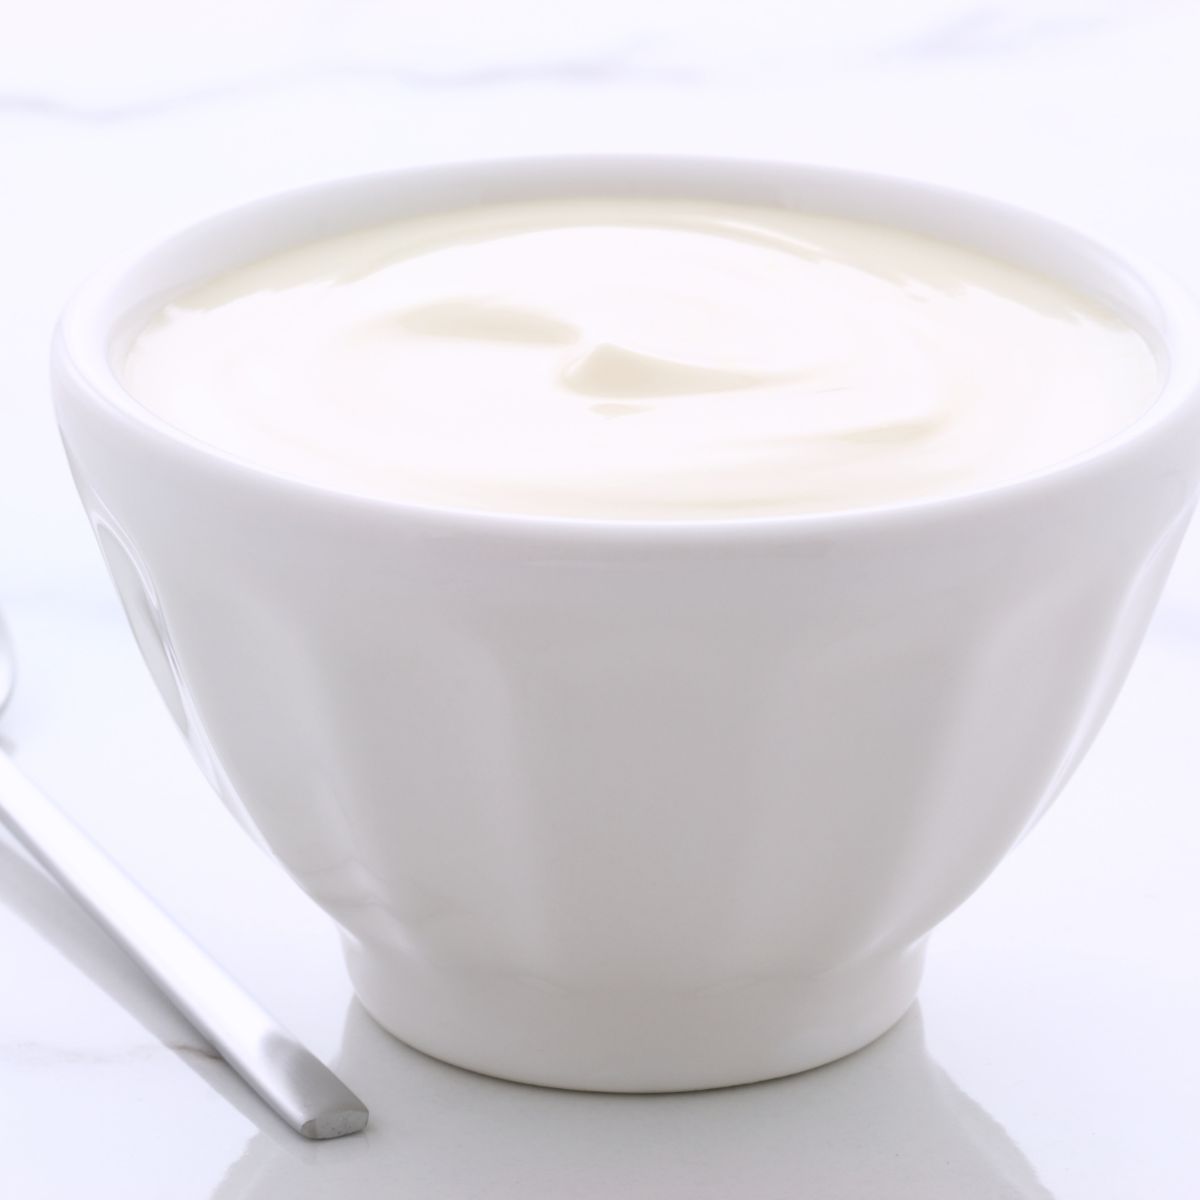 White bowl of plain Greek yogurt.